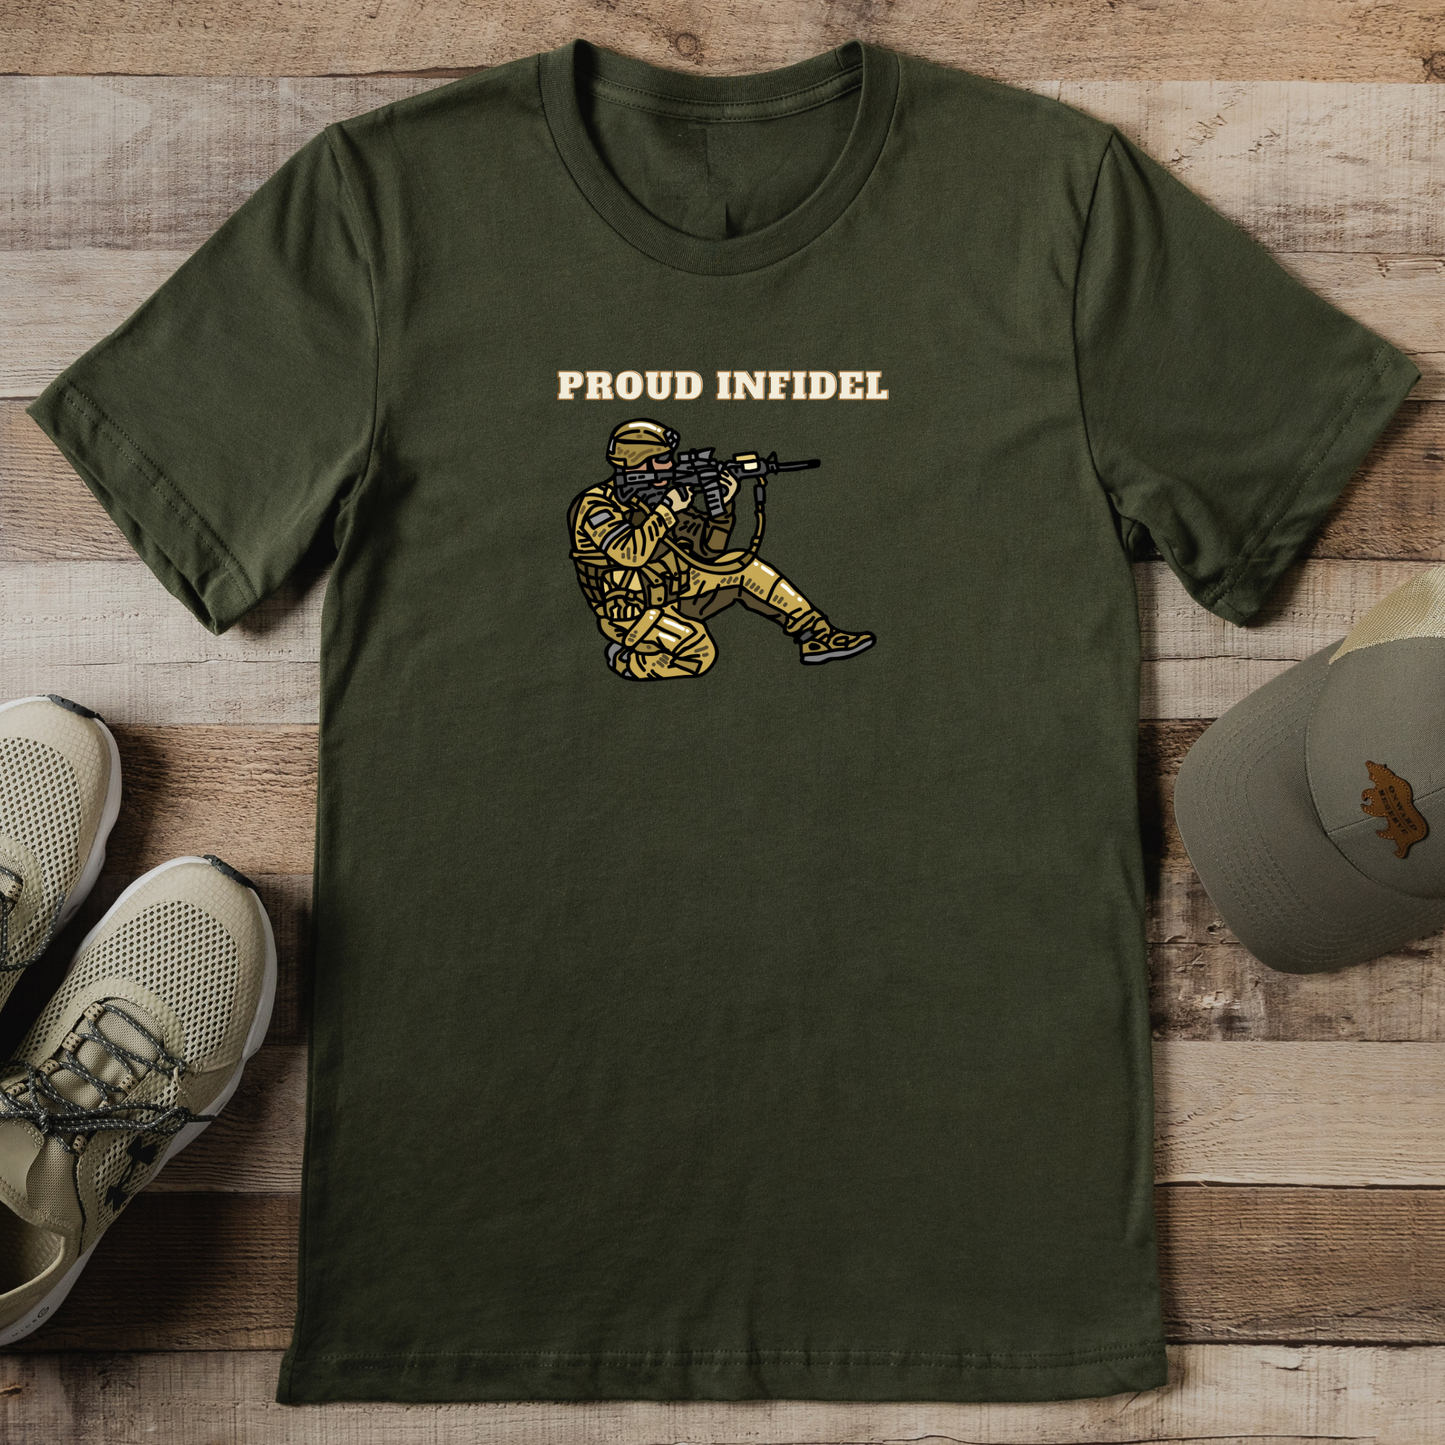 U.S. Special Ops Infidel Shirt, Proud Infidel U.S. Military T shirt